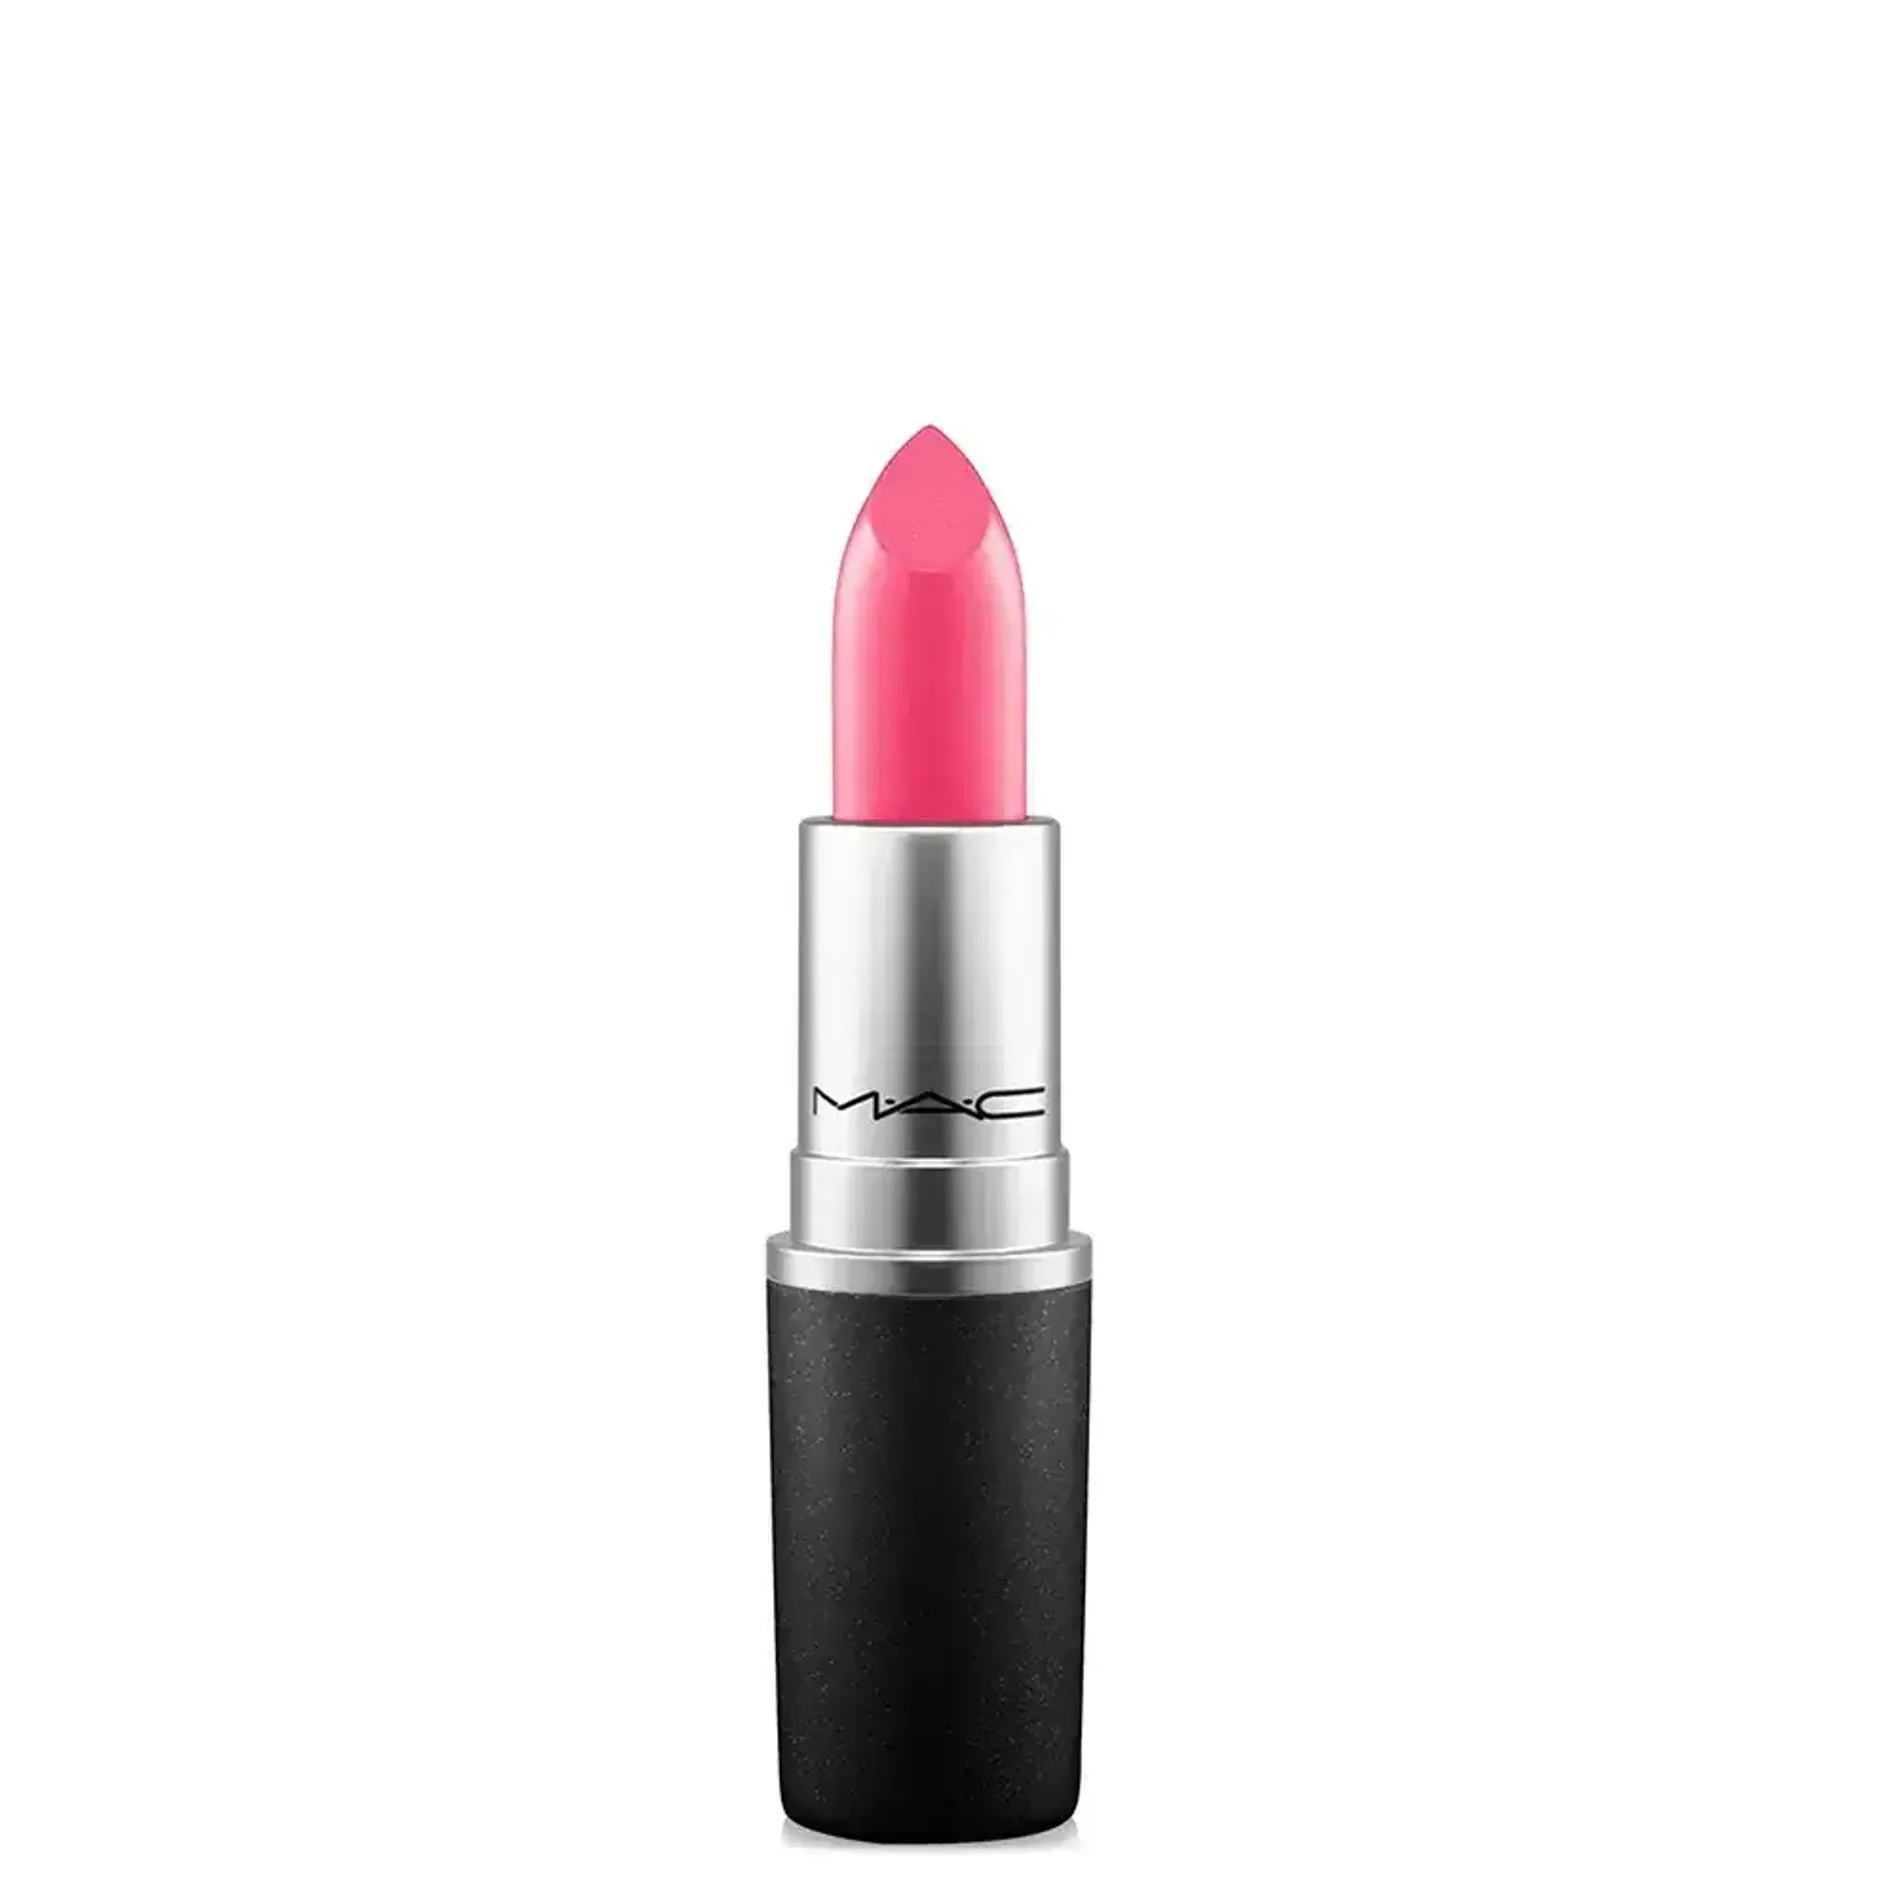 son-thoi-mac-lustre-lipstick-3g-5